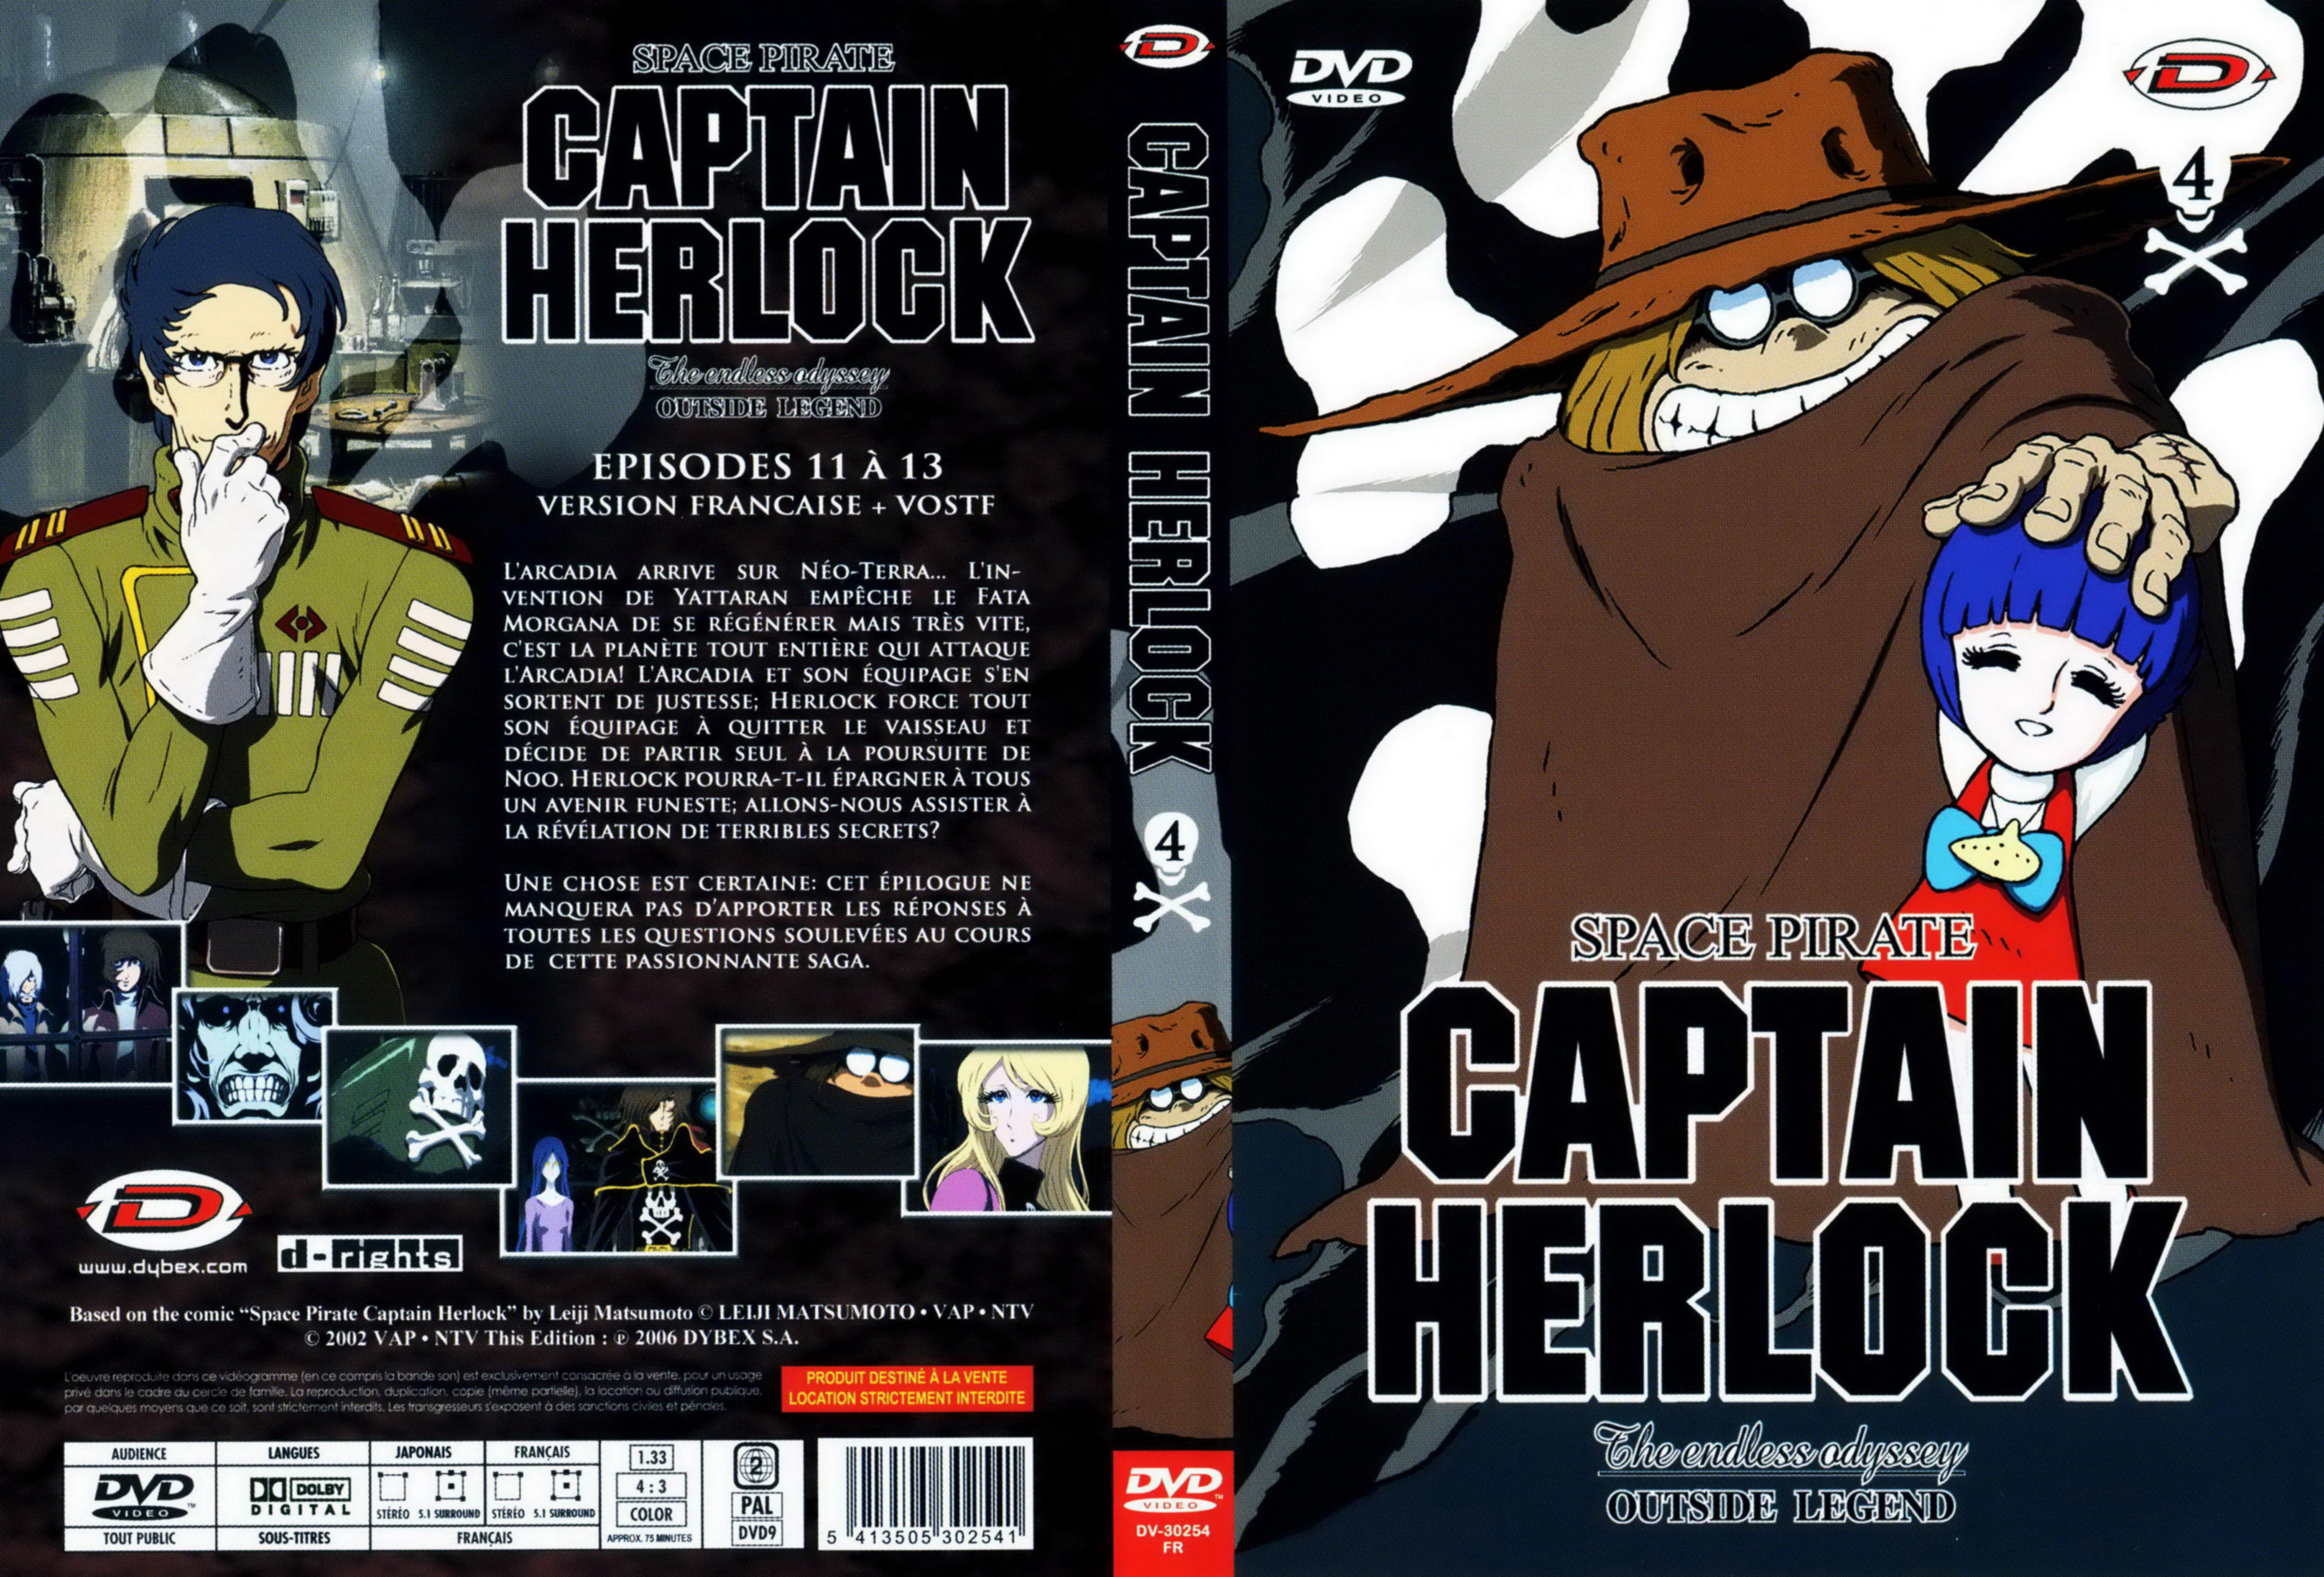 Jaquette DVD Captain Herlock The endless odyssey DVD 4